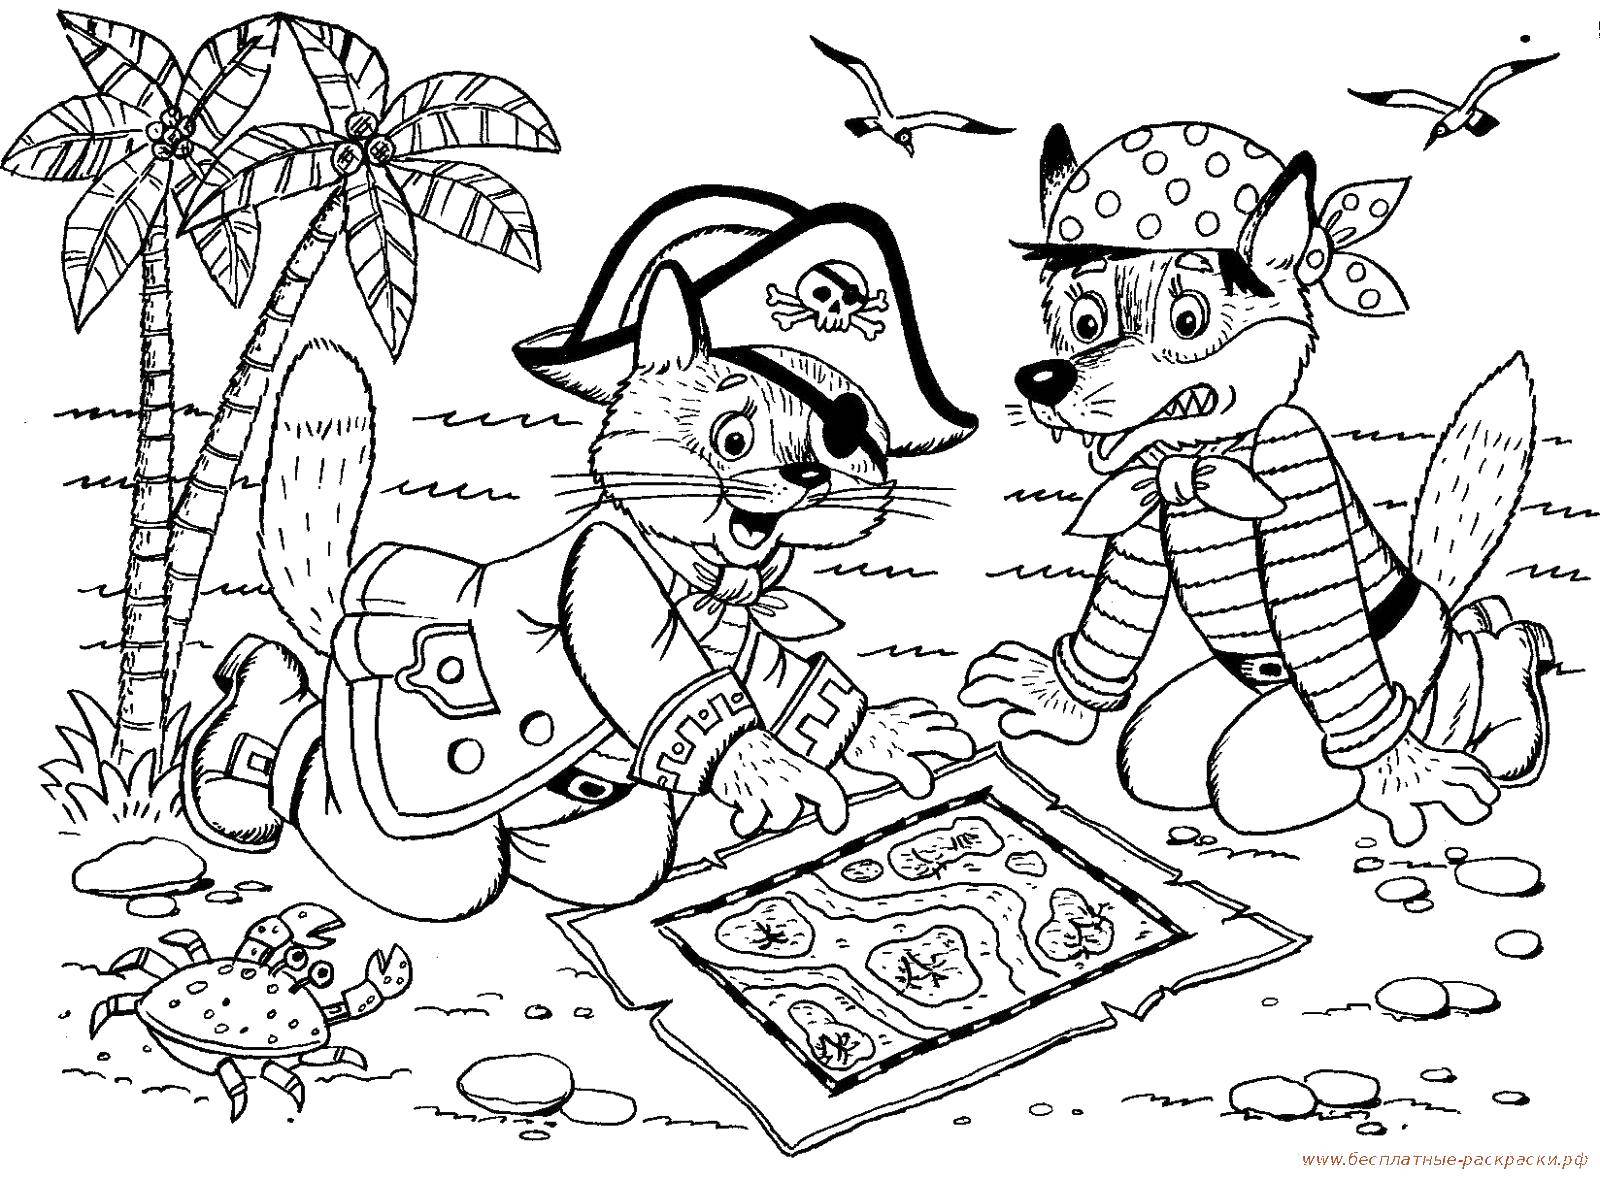 Coloring Pirates looking for treasure. Category coloring book of treasures. Tags:  Pirate, island, treasure.